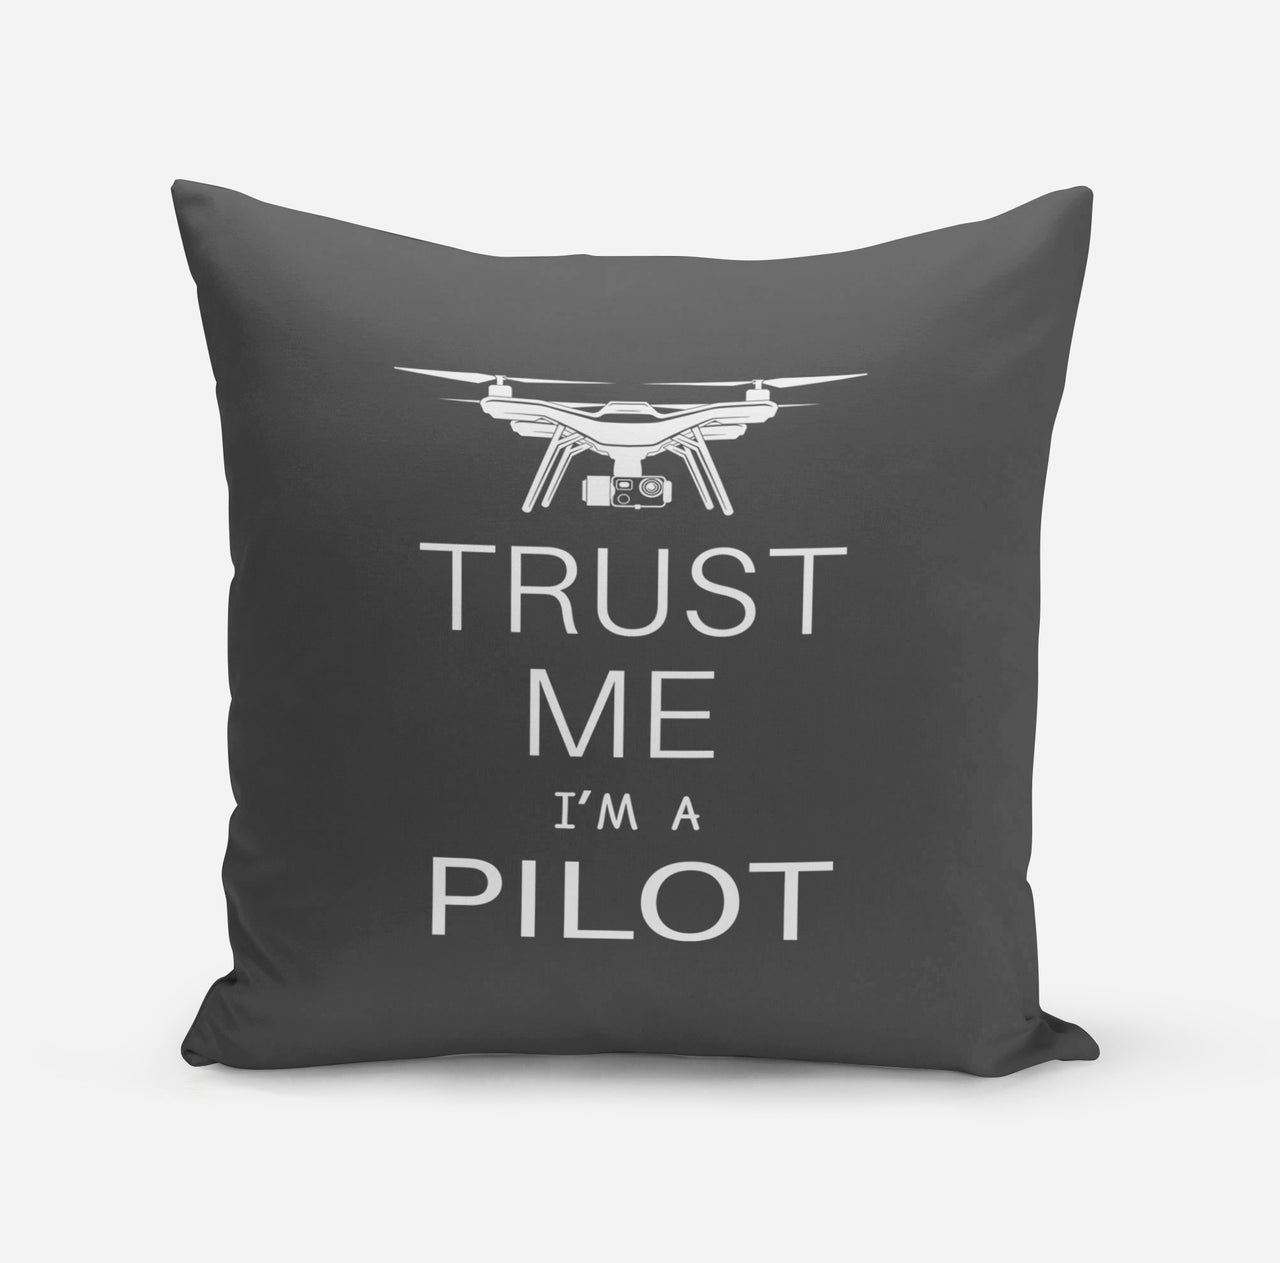 Trust Me I'm a Pilot (Drone) Designed Pillows